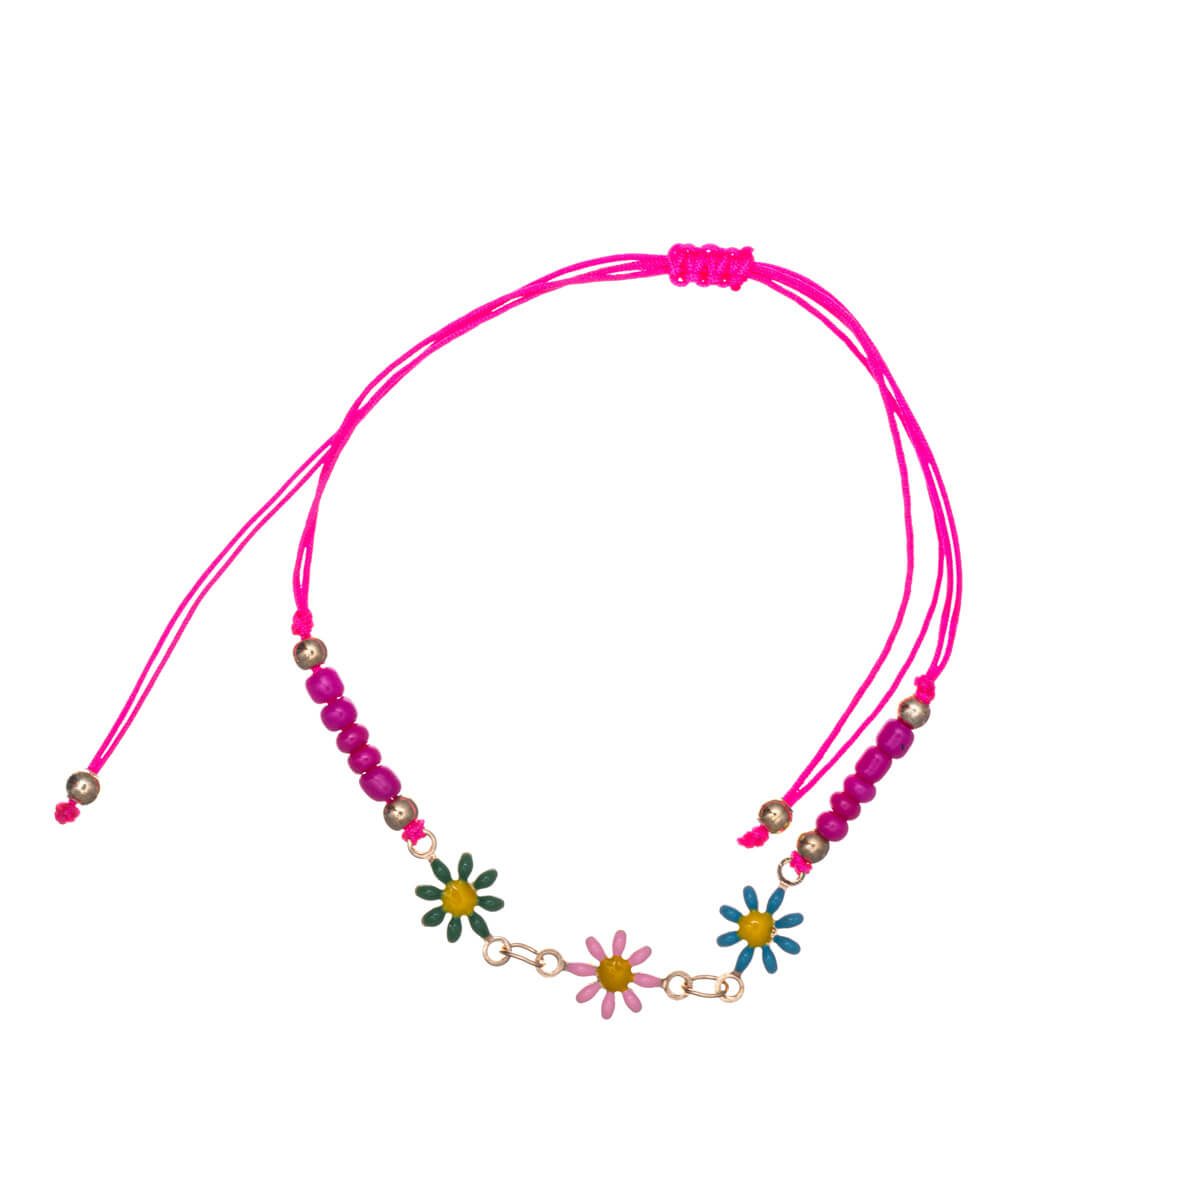 Adjustable daisy bracelet with beads